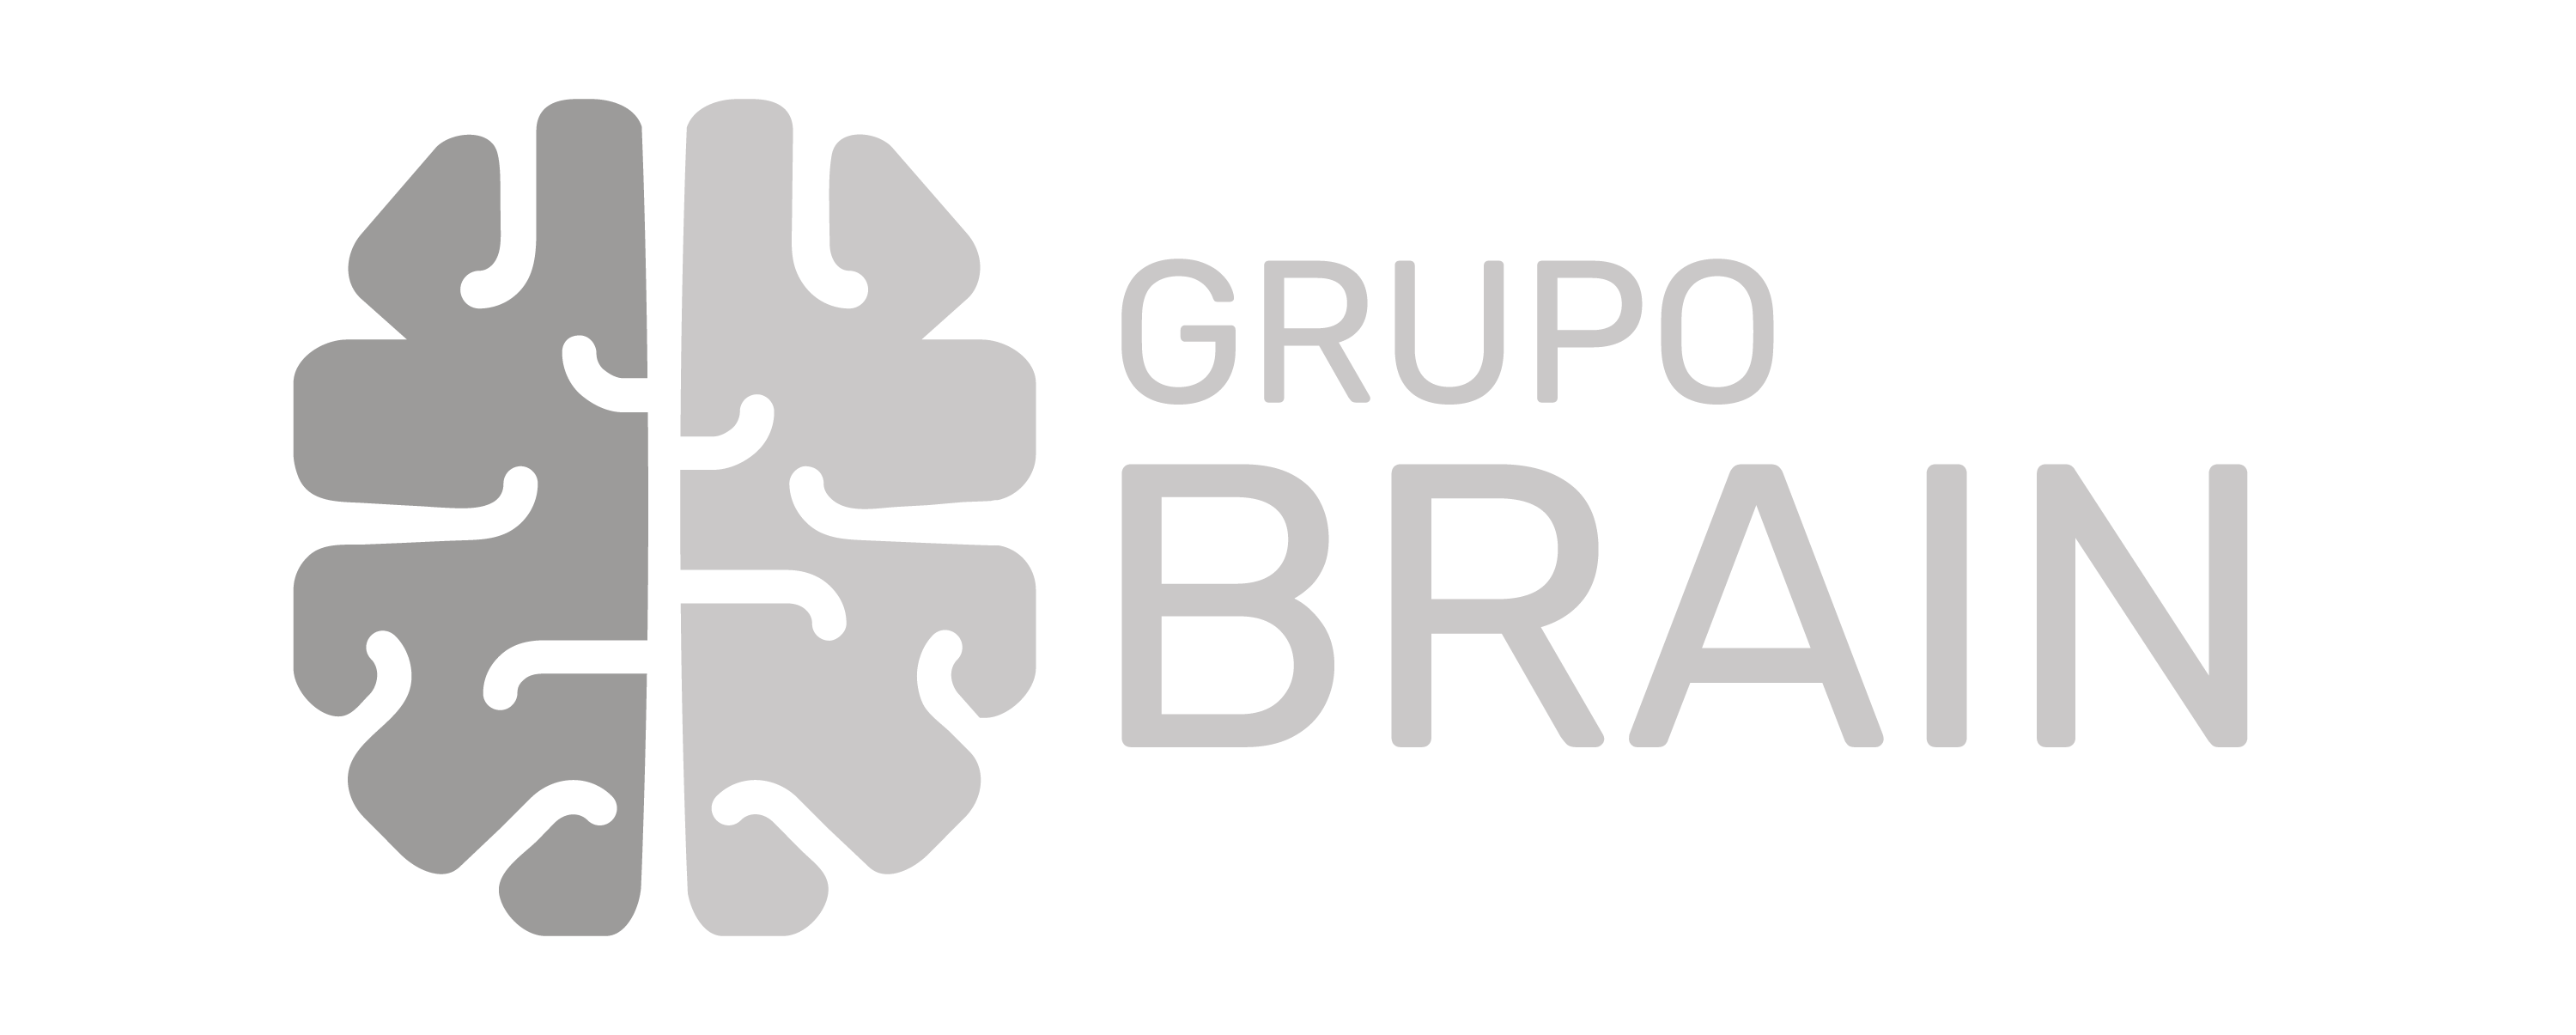 Brain Engenharia - Auditoria - ISO 9001 - Aracaju/SE